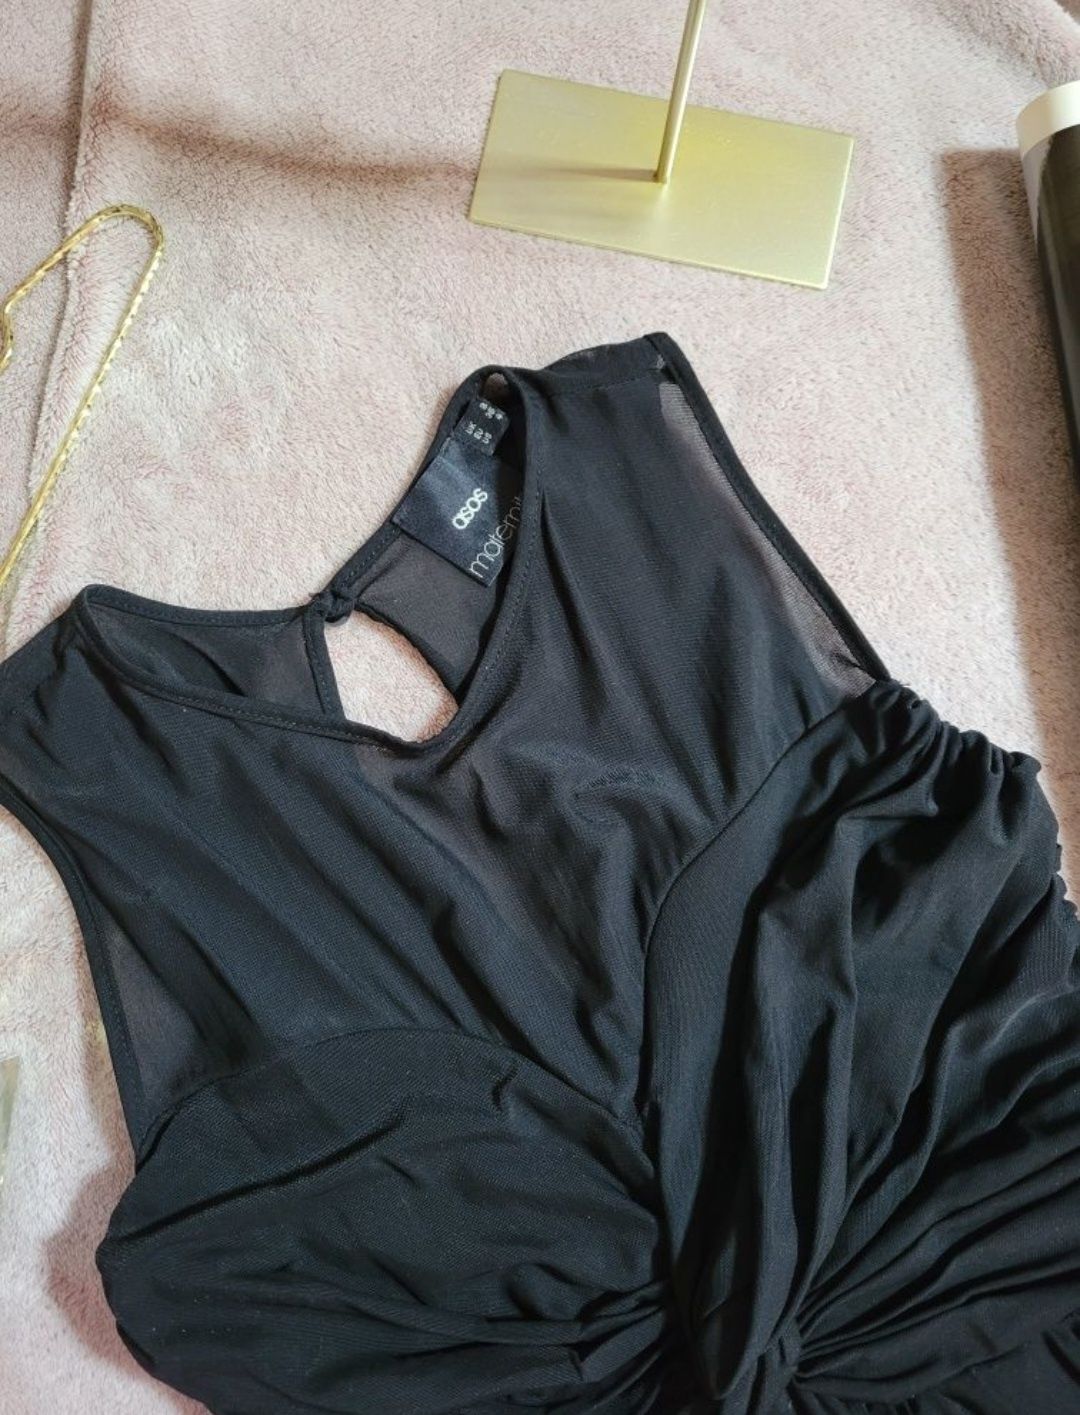 Святкова фатінова asos сукня чорна жіноча чёрное платье беременных ваг